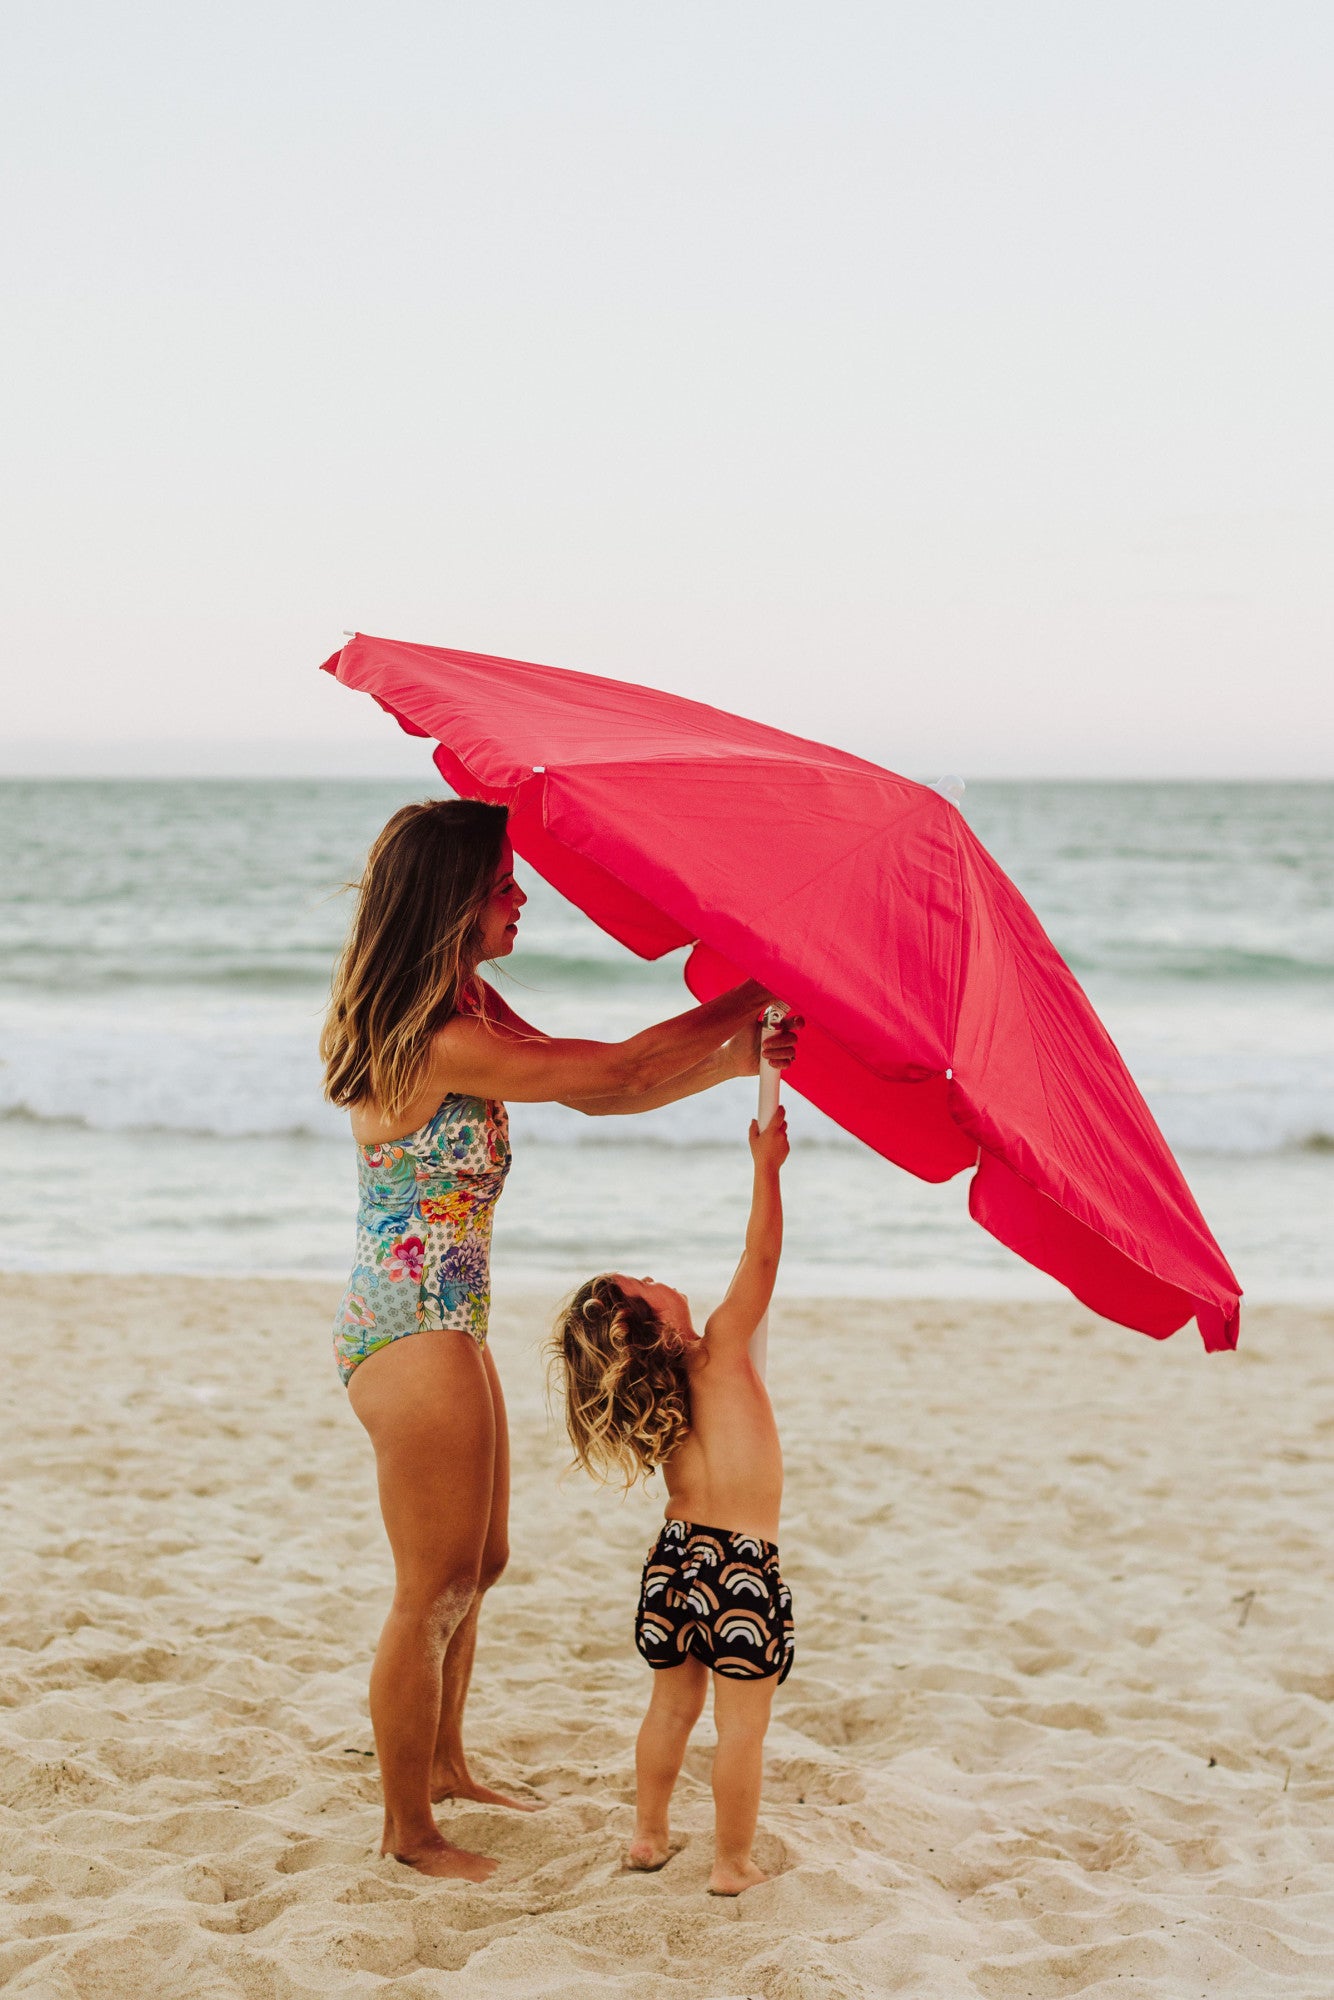 Maryland Terrapins - 5.5 Ft. Portable Beach Umbrella